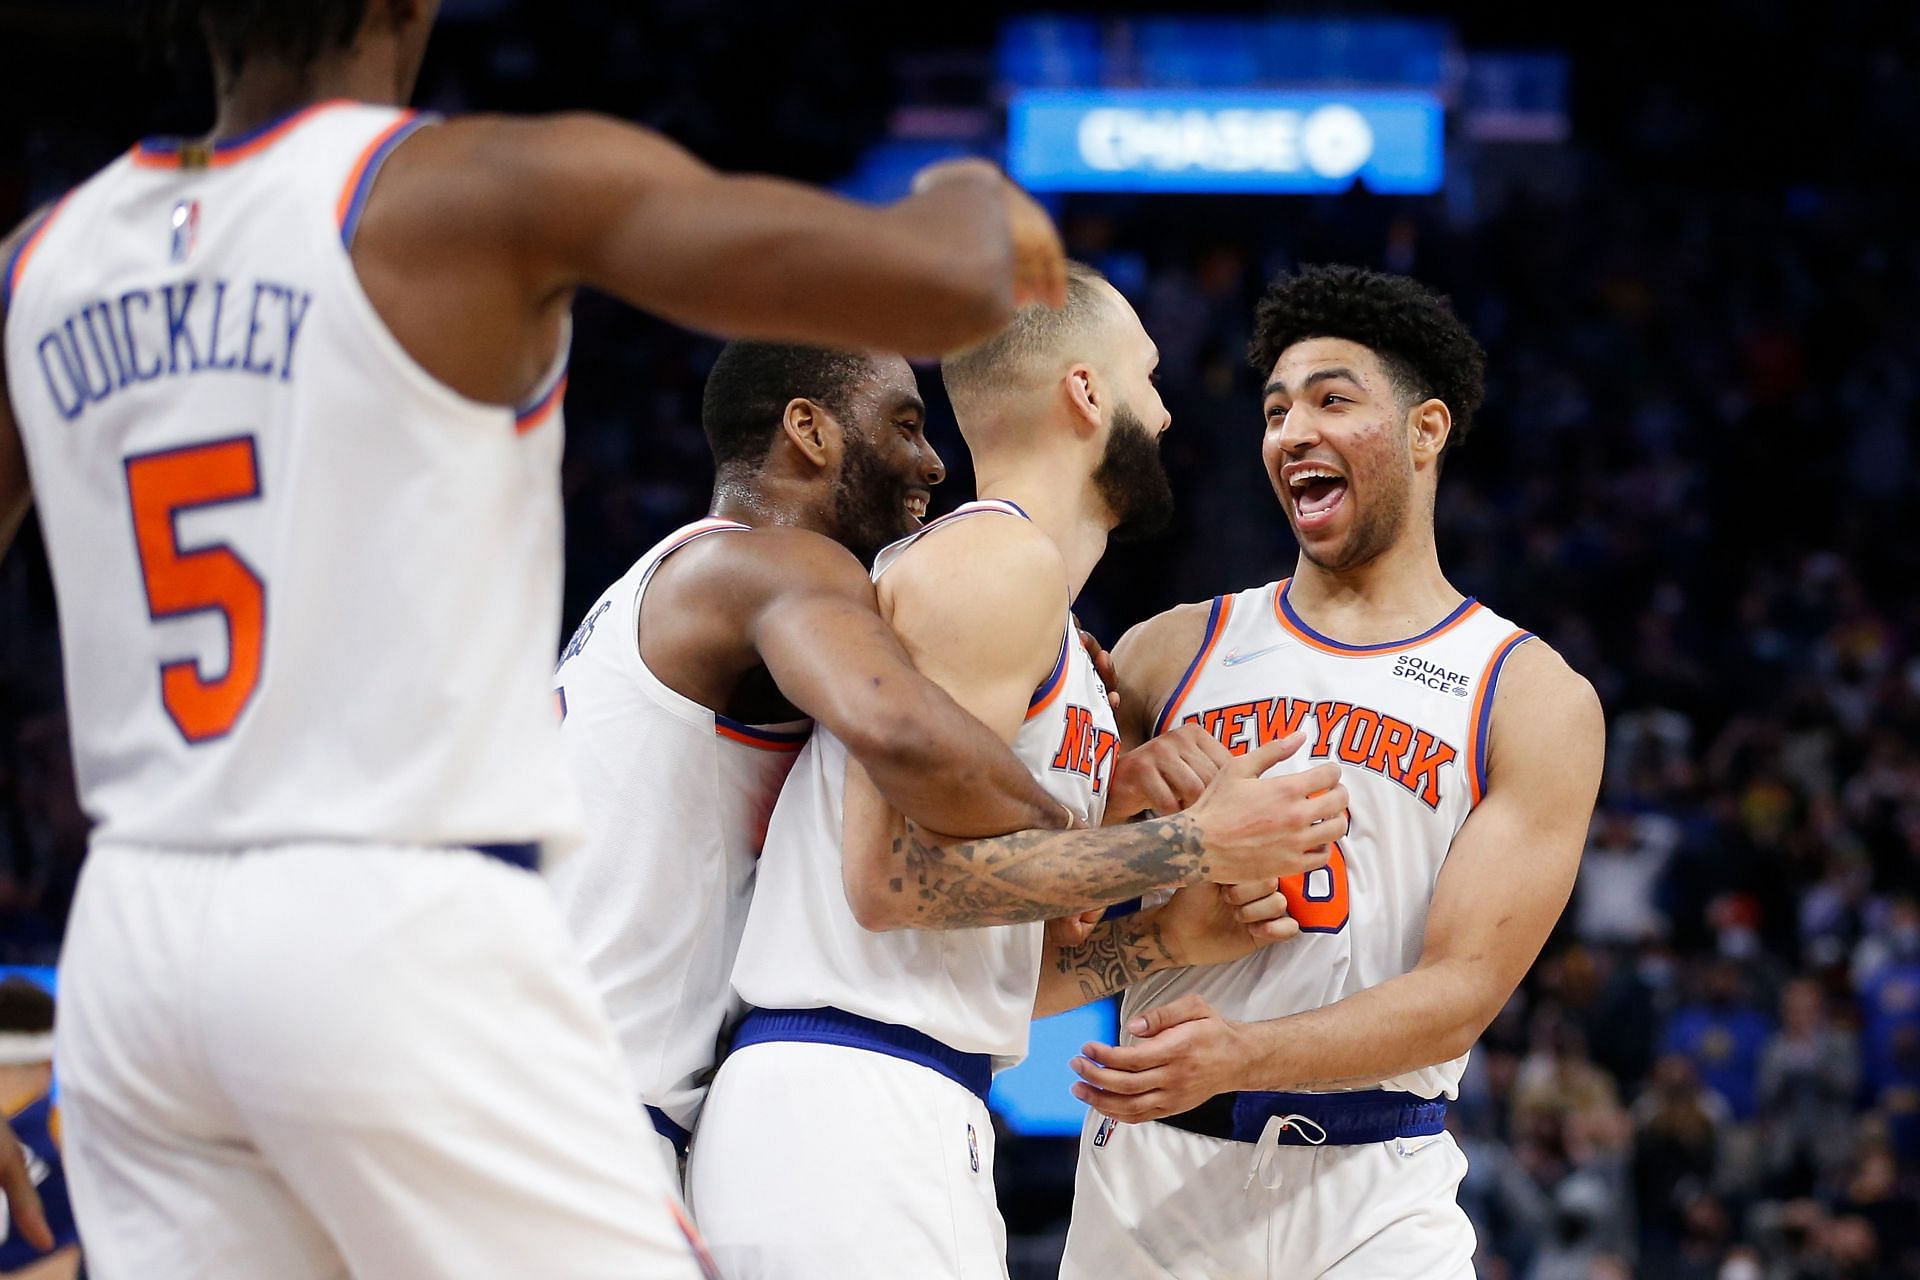 The New York Knicks celebrate a play.